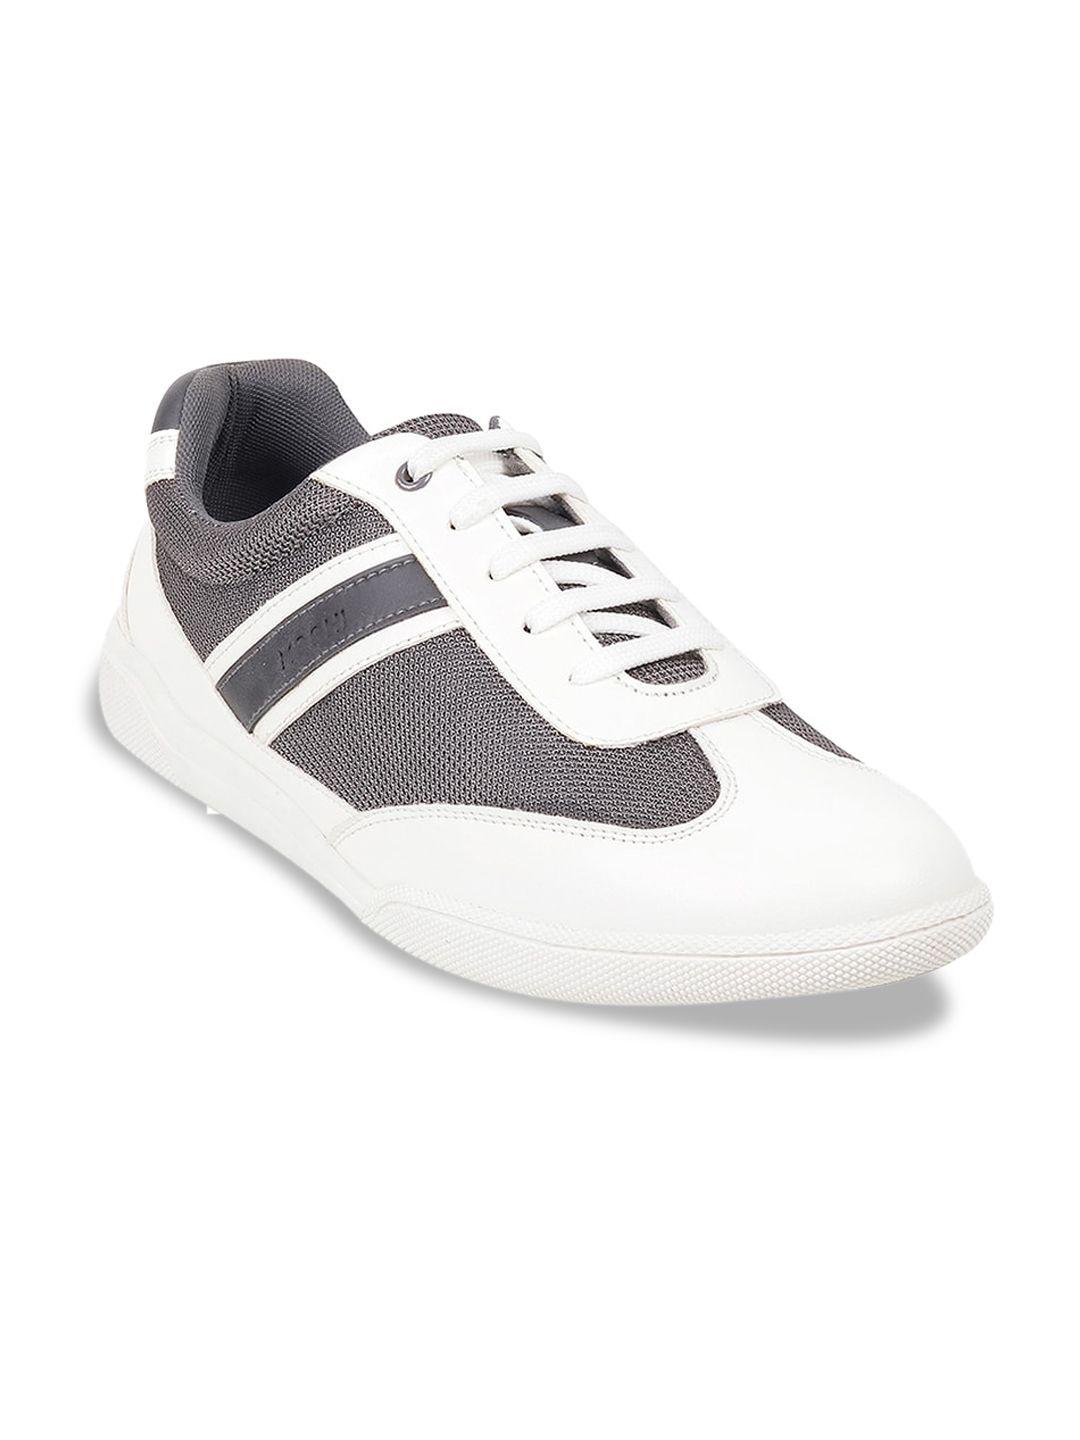 mochi-men-white-colourblocked-sneakers